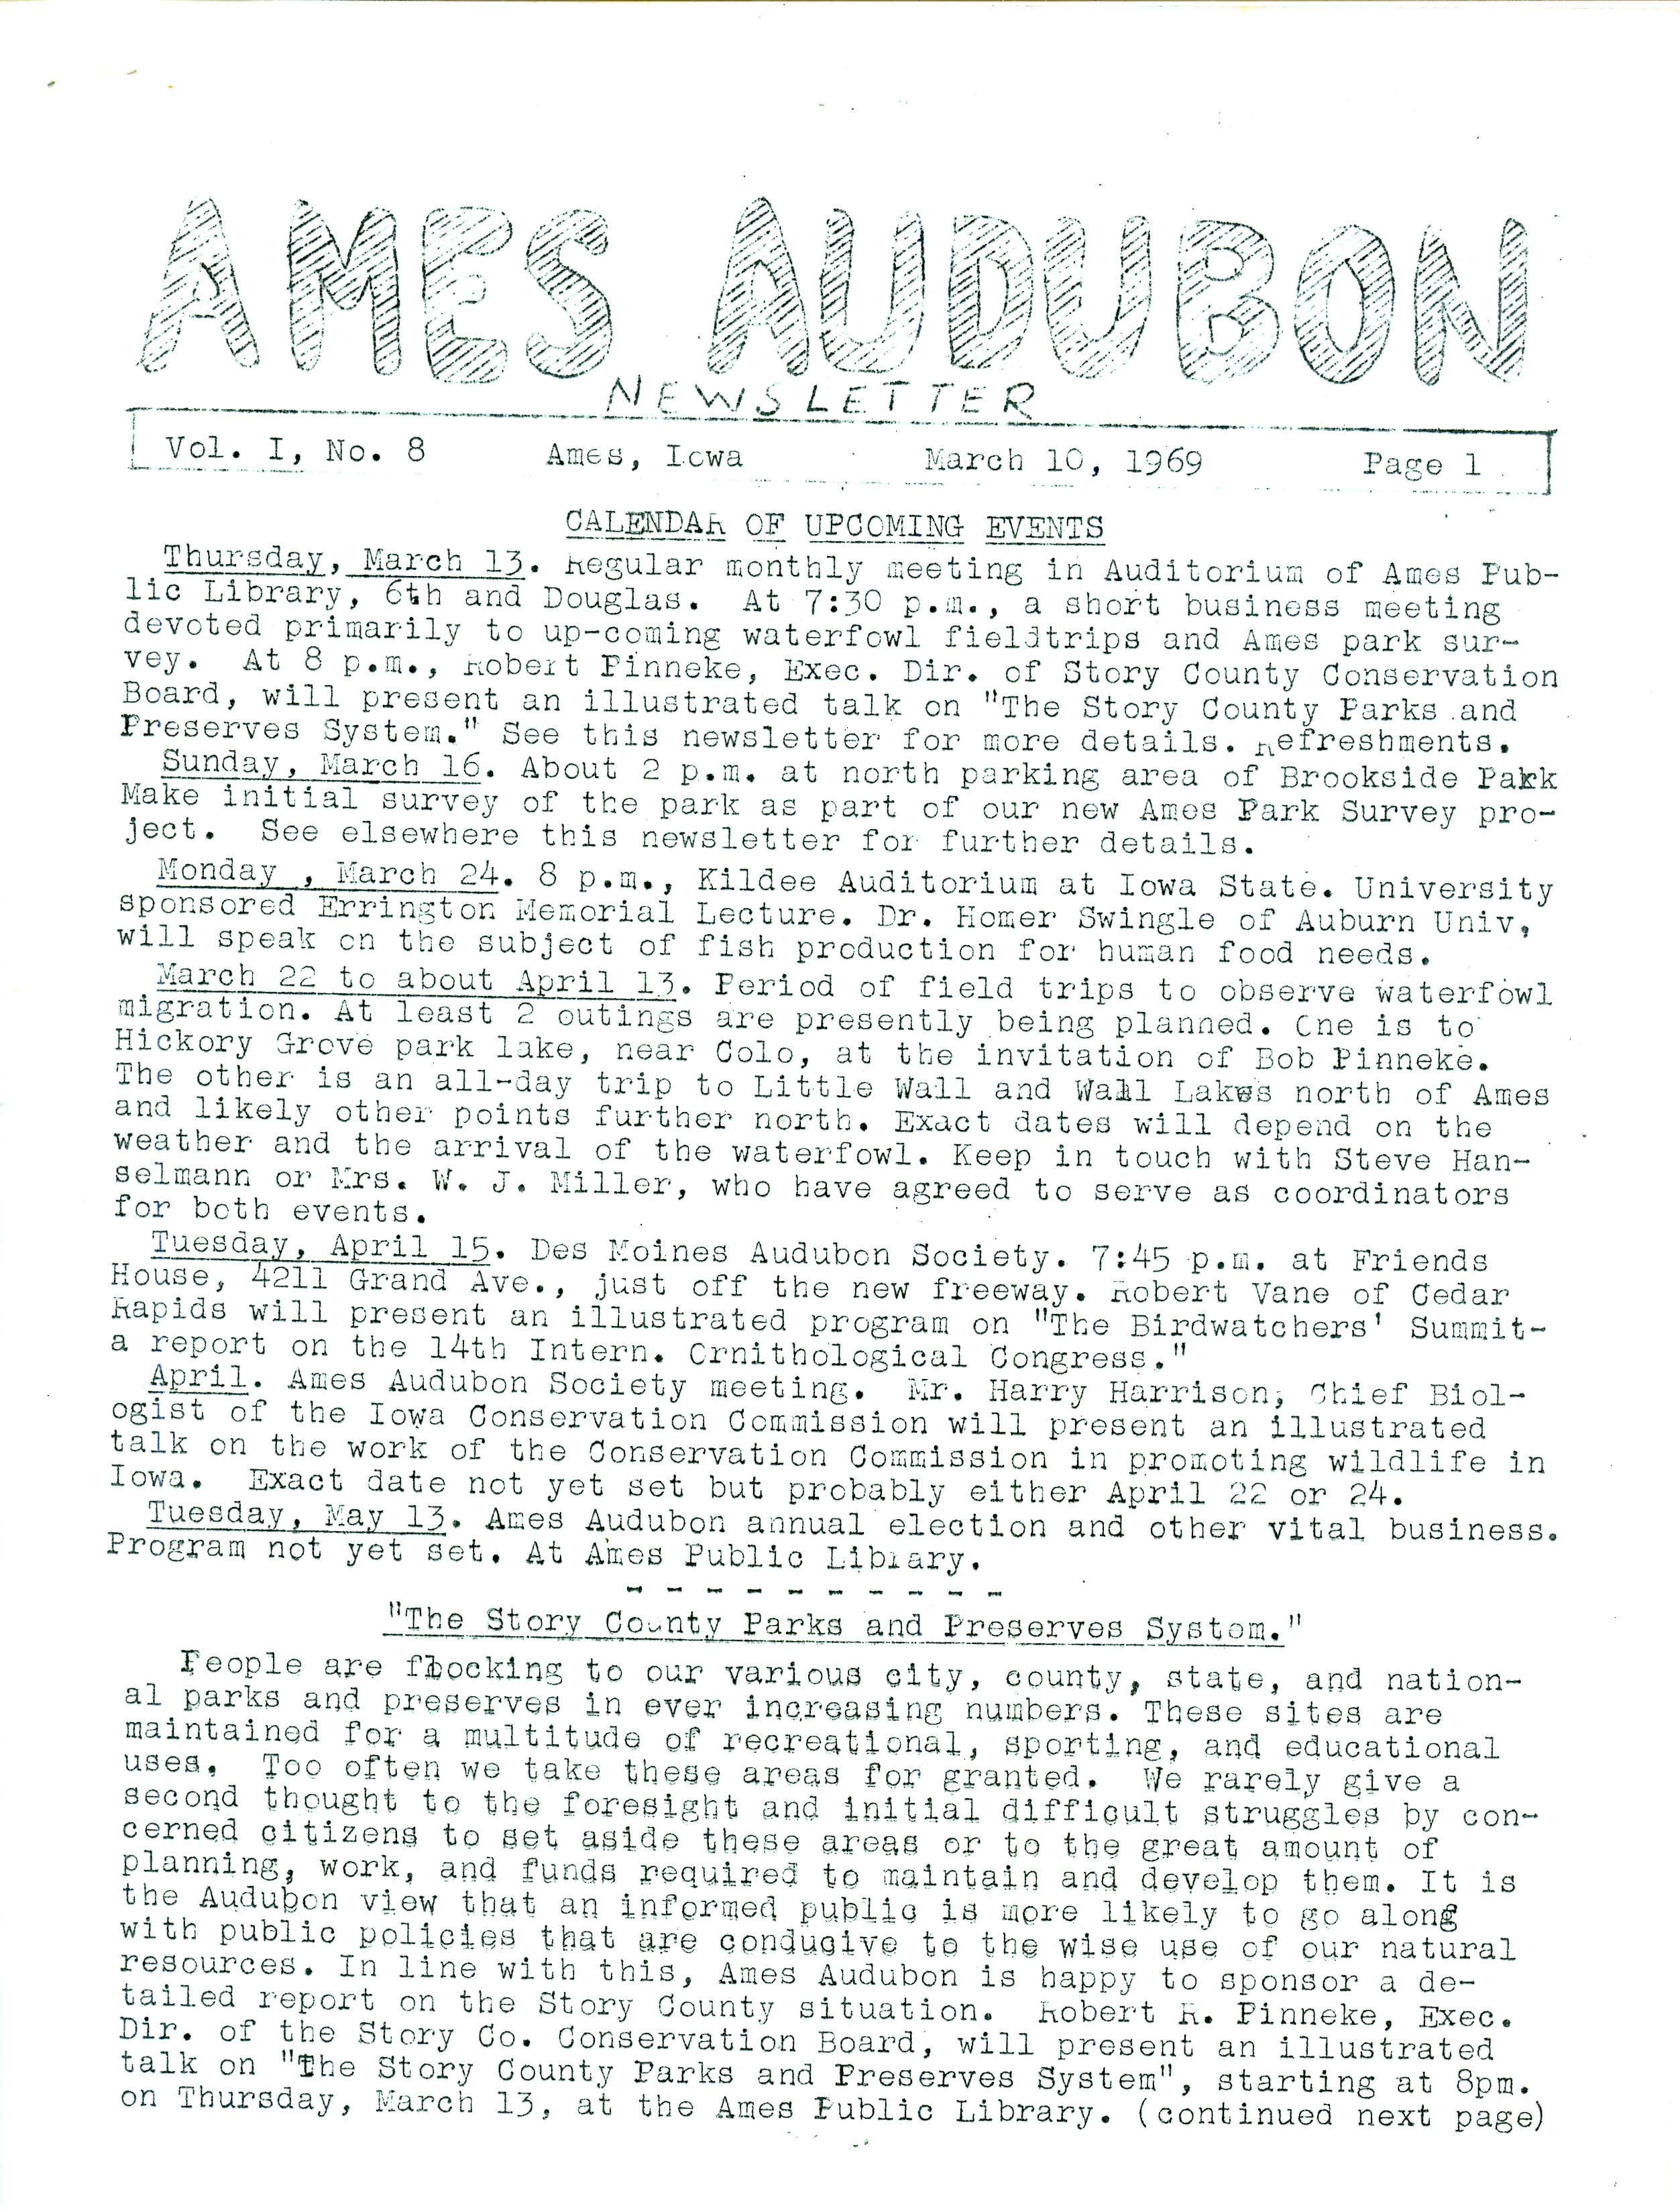 Ames Audubon Newsletter, Volume 1, Number 8, March 10, 1969